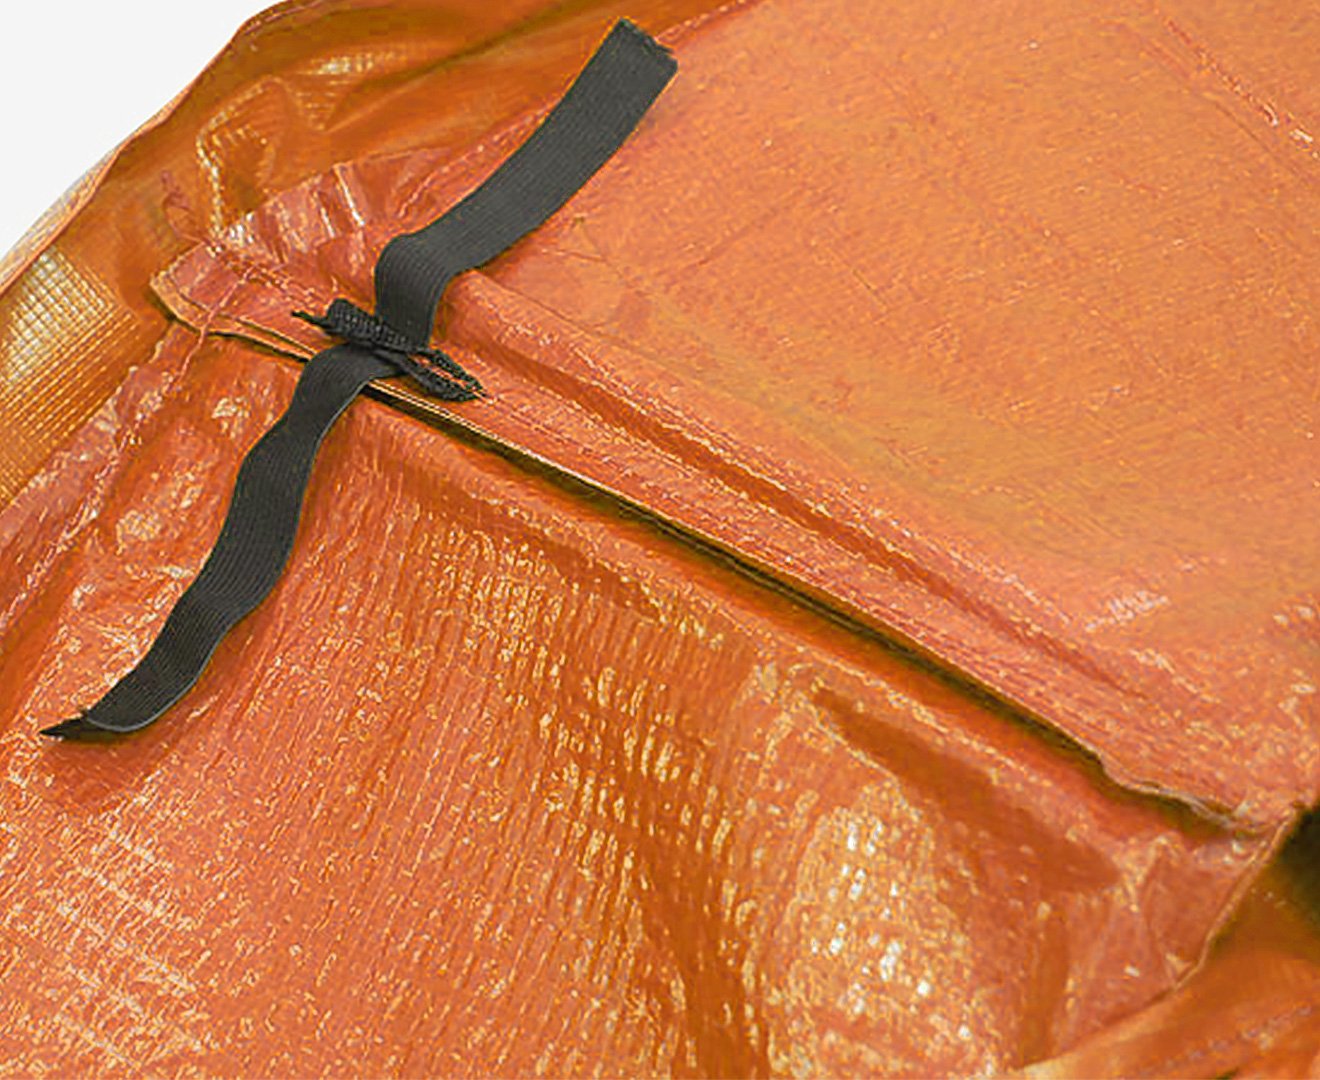 Kahuna 10ft Trampoline Replacement Pad Round - Orange